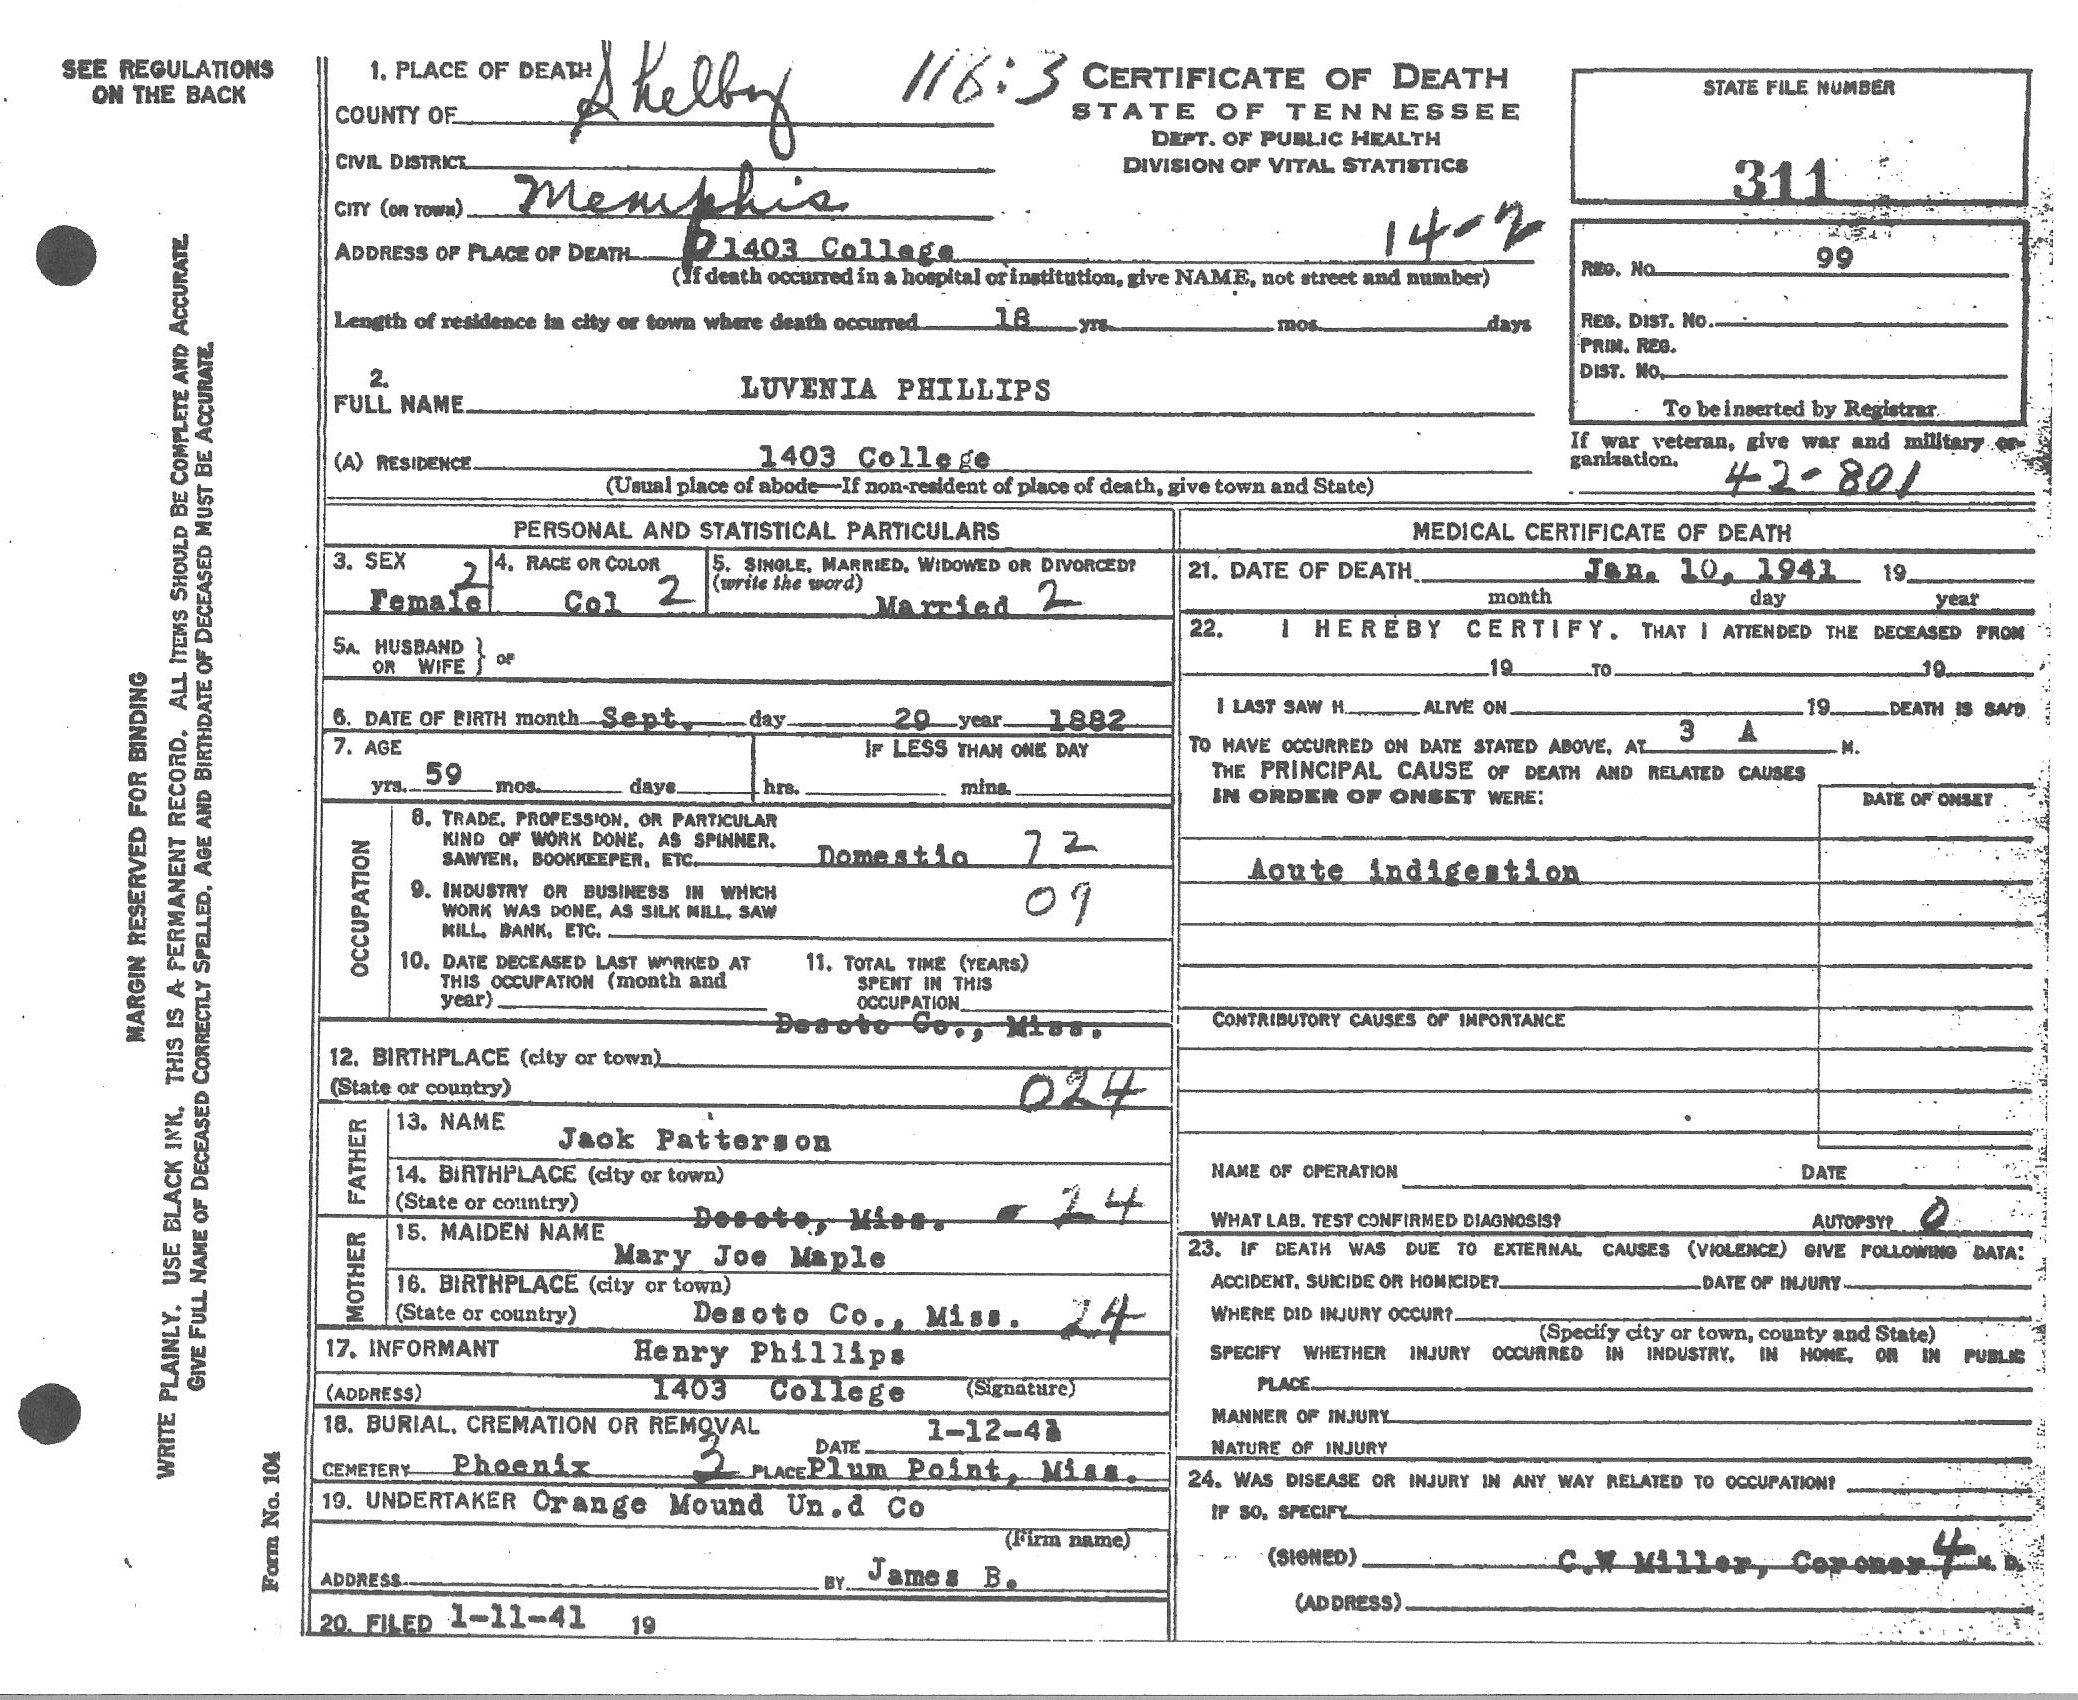 Luvenia Patterson-Phillips' Death Certificate